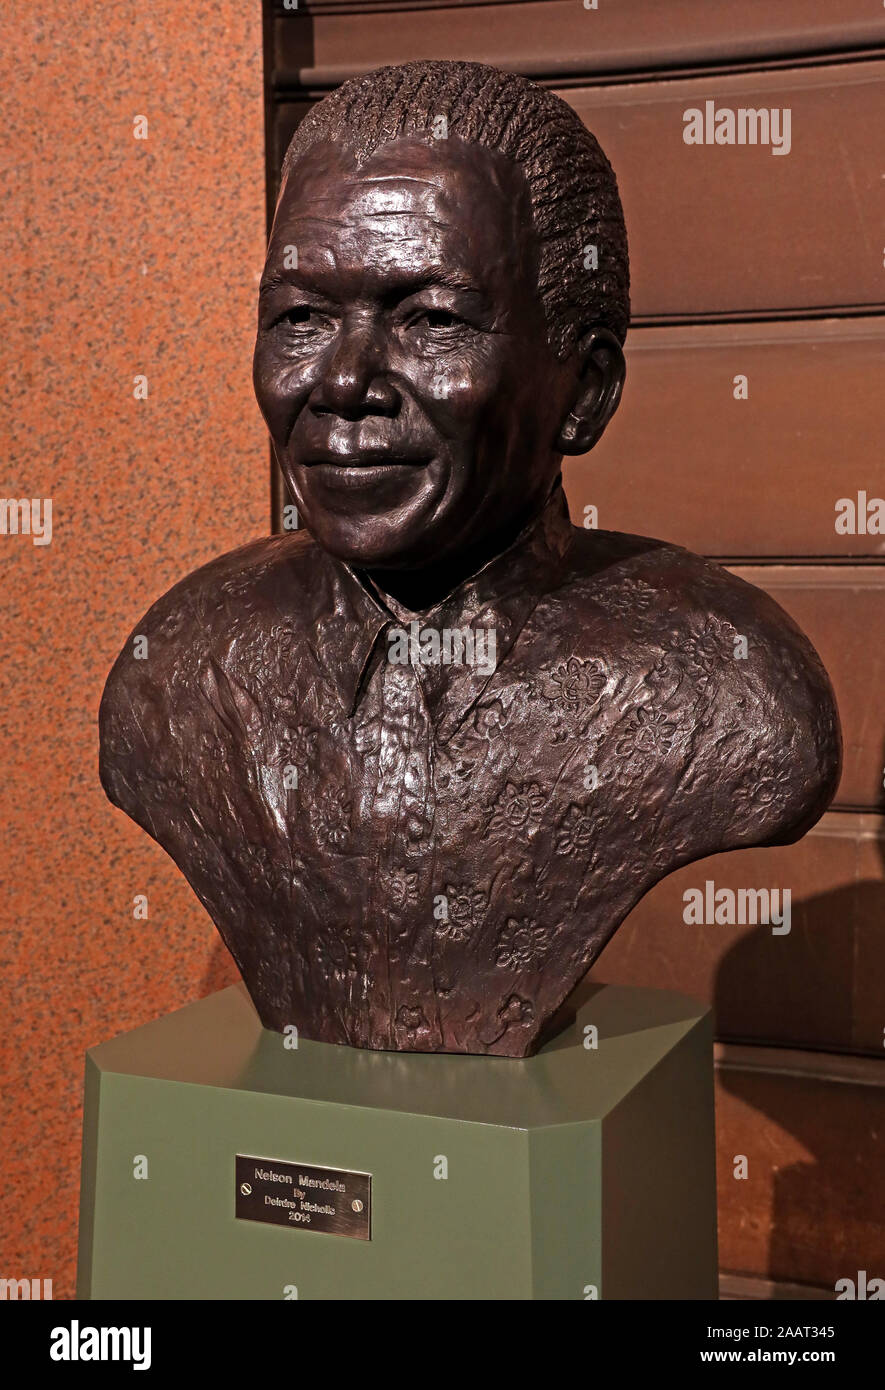 Nelson Mandela statua, Glasgow City Chambers ingresso, da Deirdre Nicholls,2014 Foto Stock